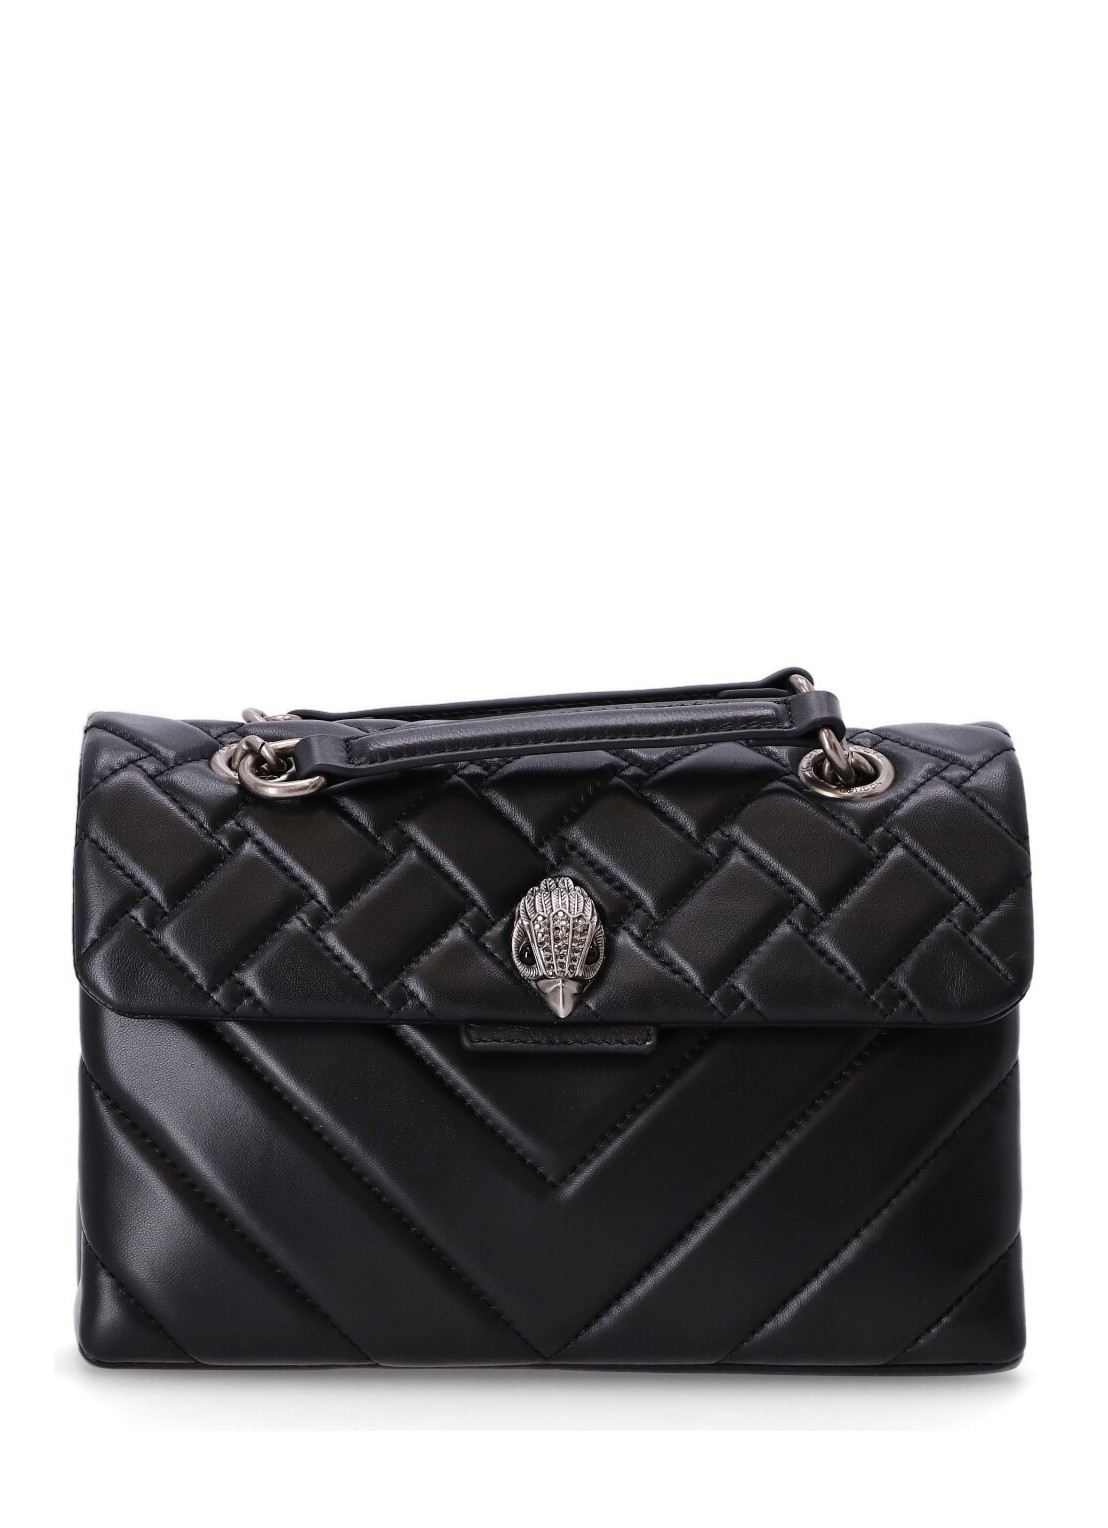 Handbag kurt geiger handbag woman leather kensington x bag 1470405109 05 talla negro
 